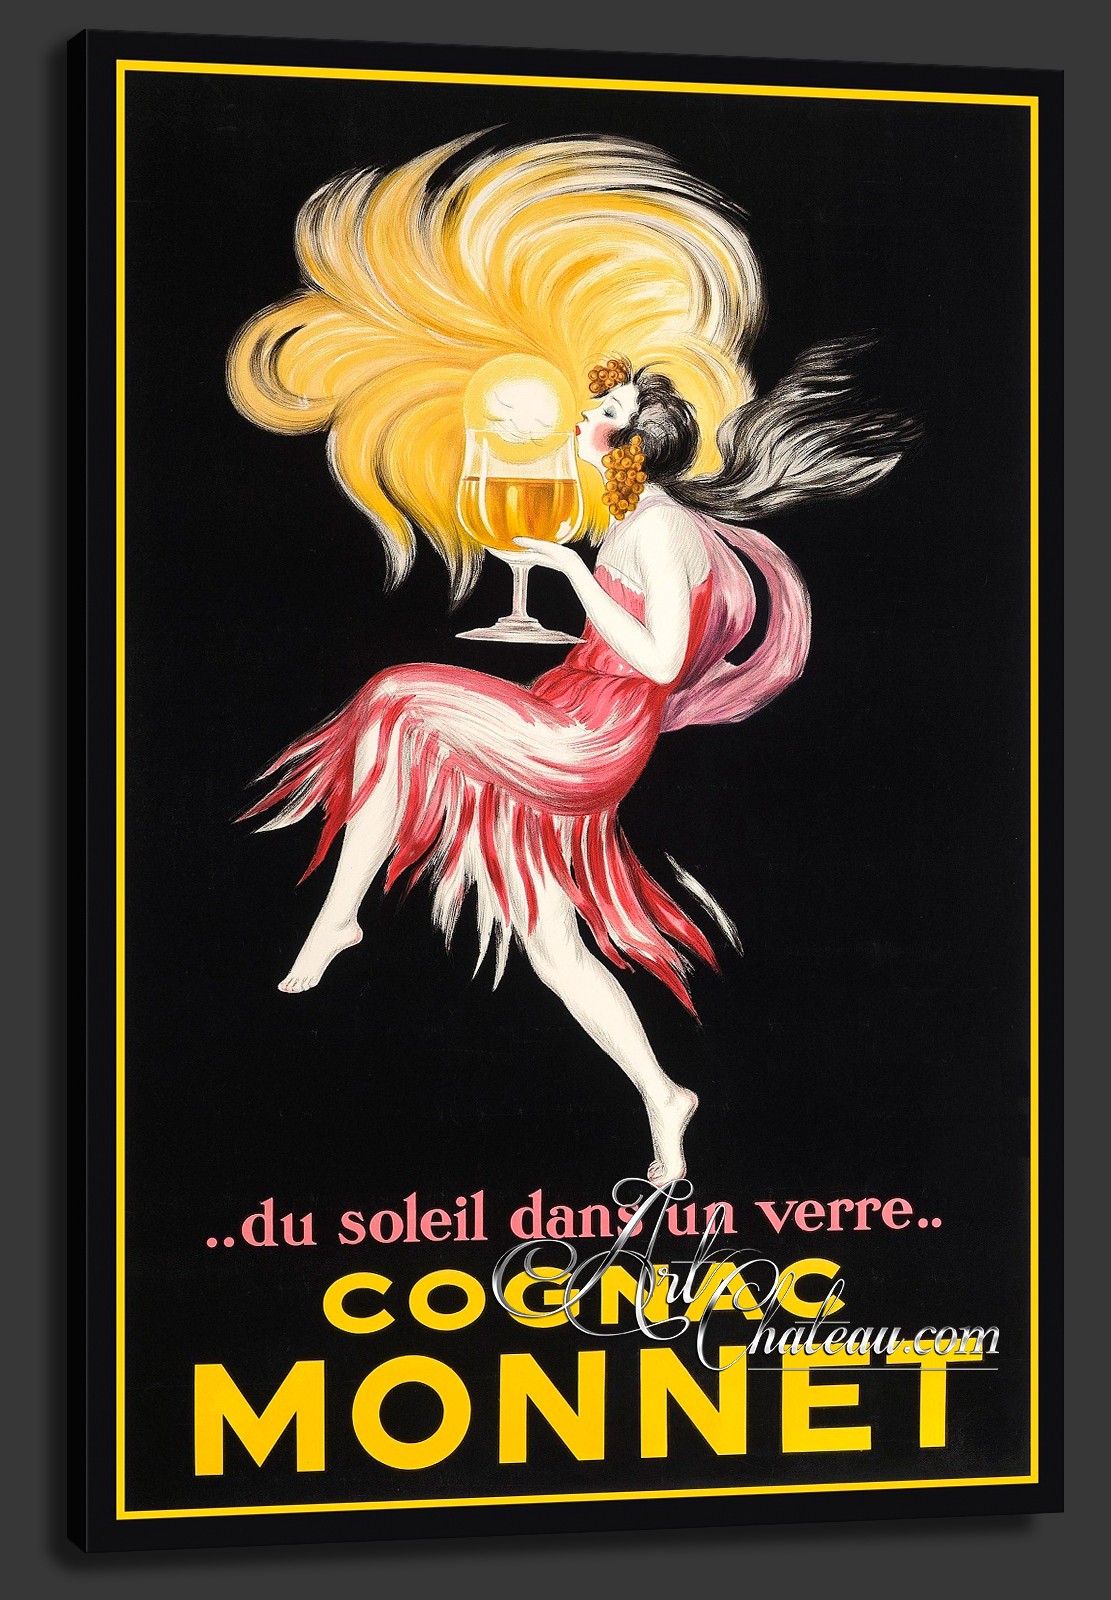 Cognac Monnet, after Vintage Poster by Leonetto Cappiello